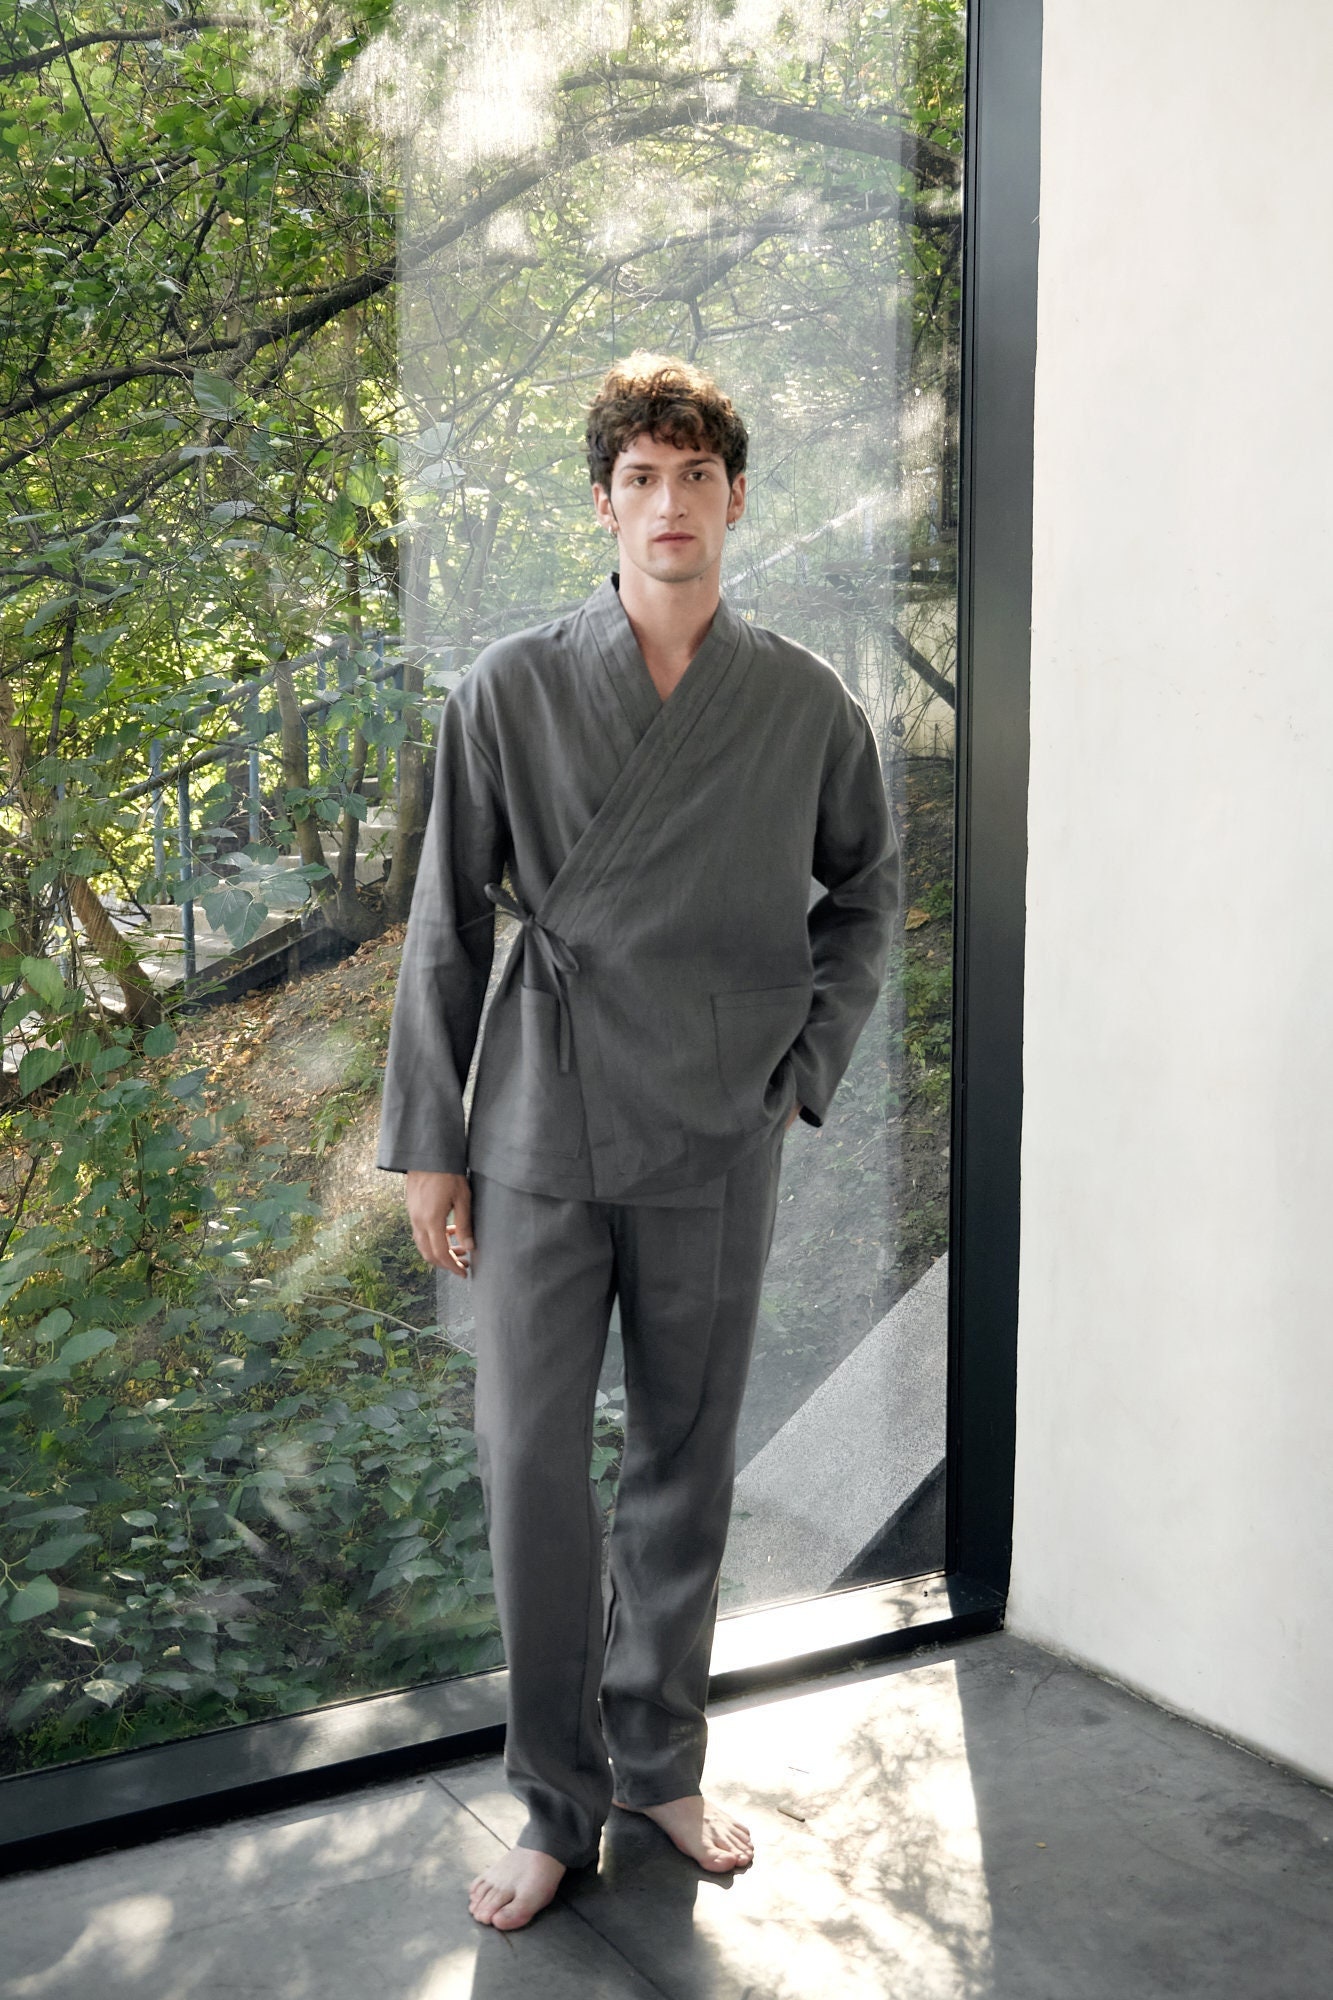 Men's Linen Loungewear Set MONTEREY. Brown Windowpane Pajama Set. Linen  Sleepwear for Men 